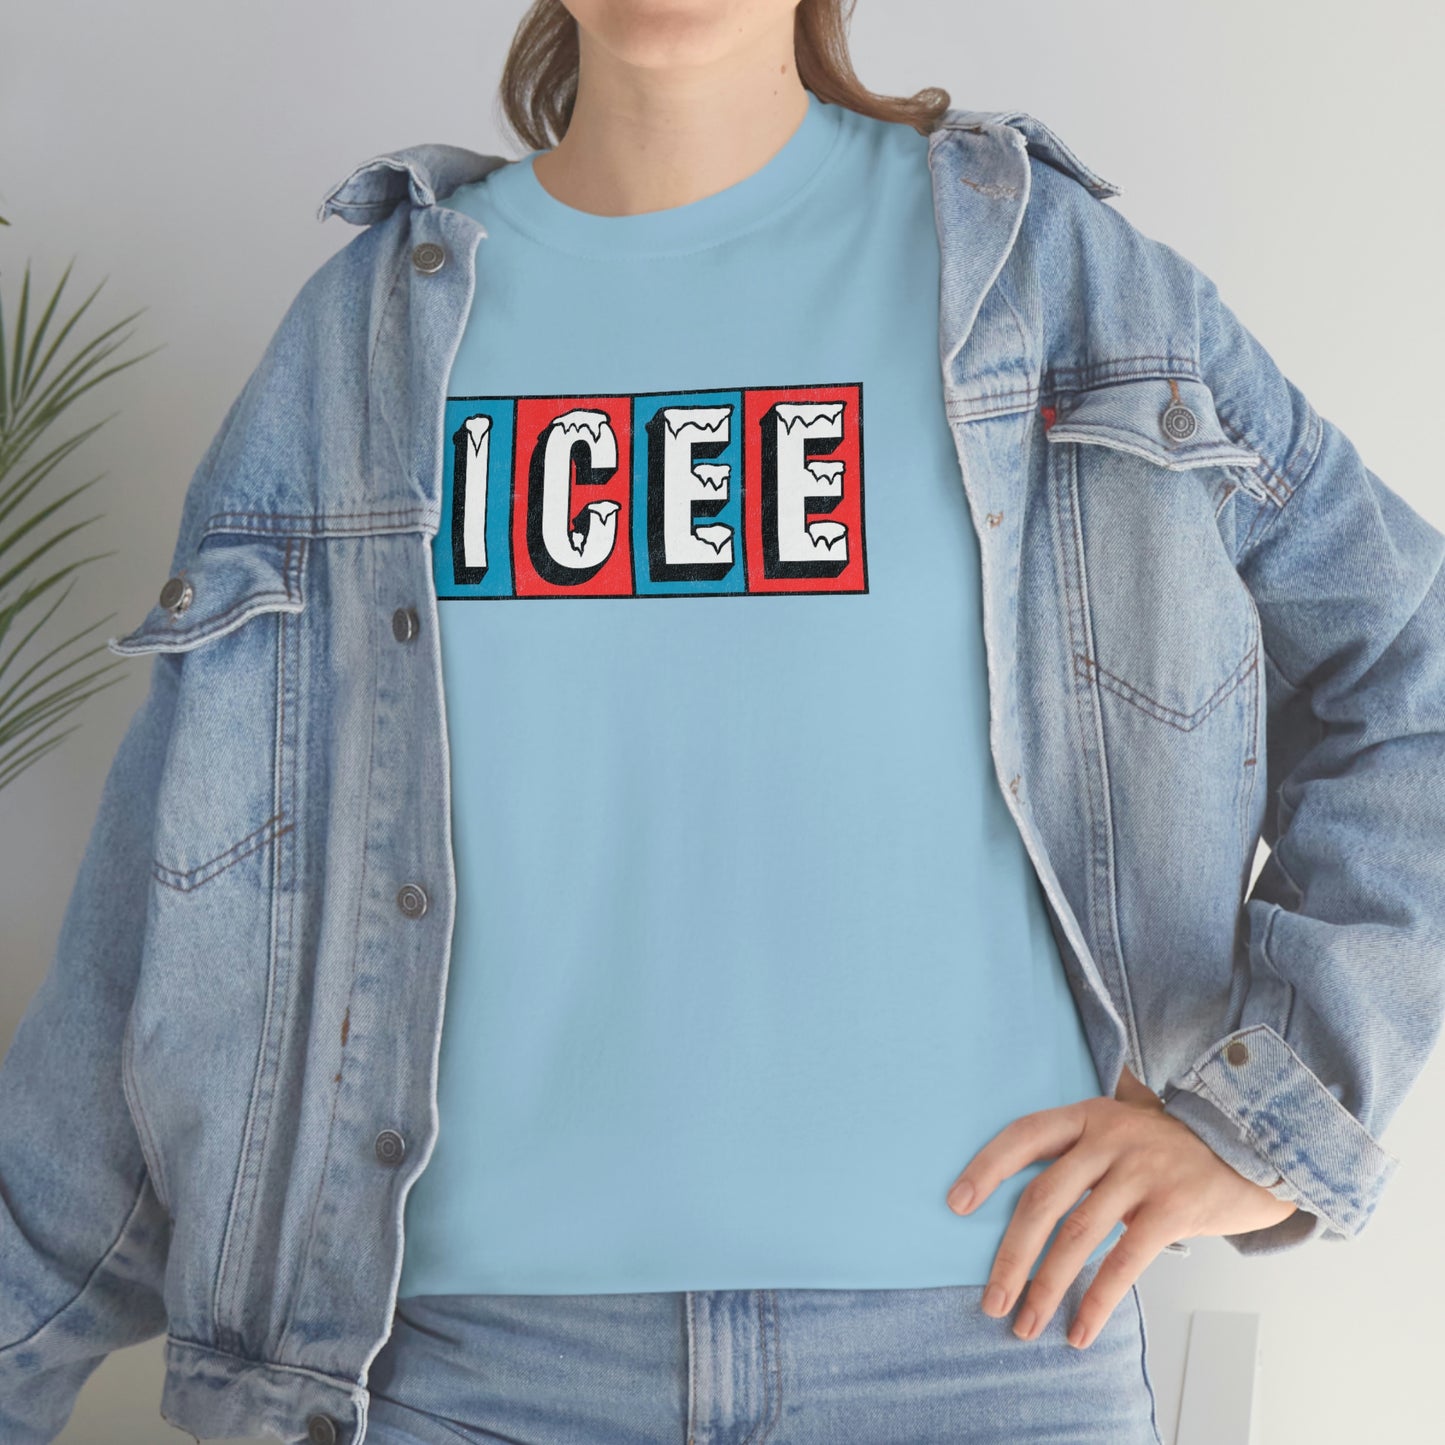 Icee T-Shirt